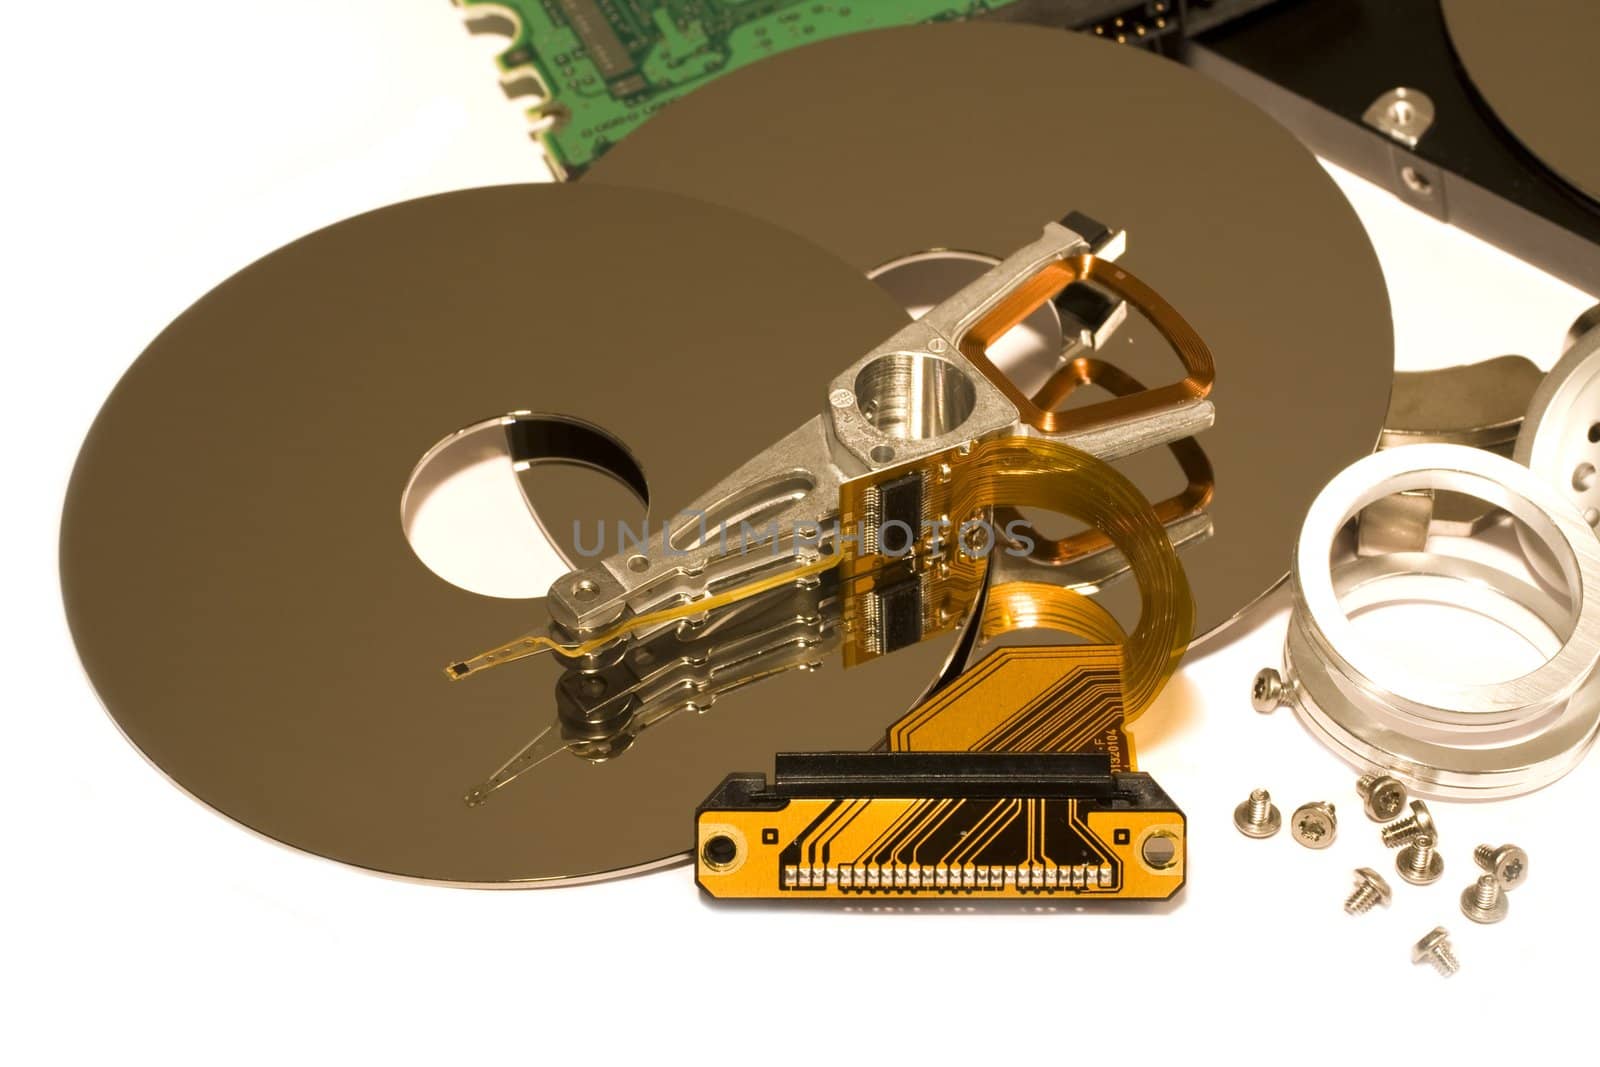 several parts of hard disk drives on light background